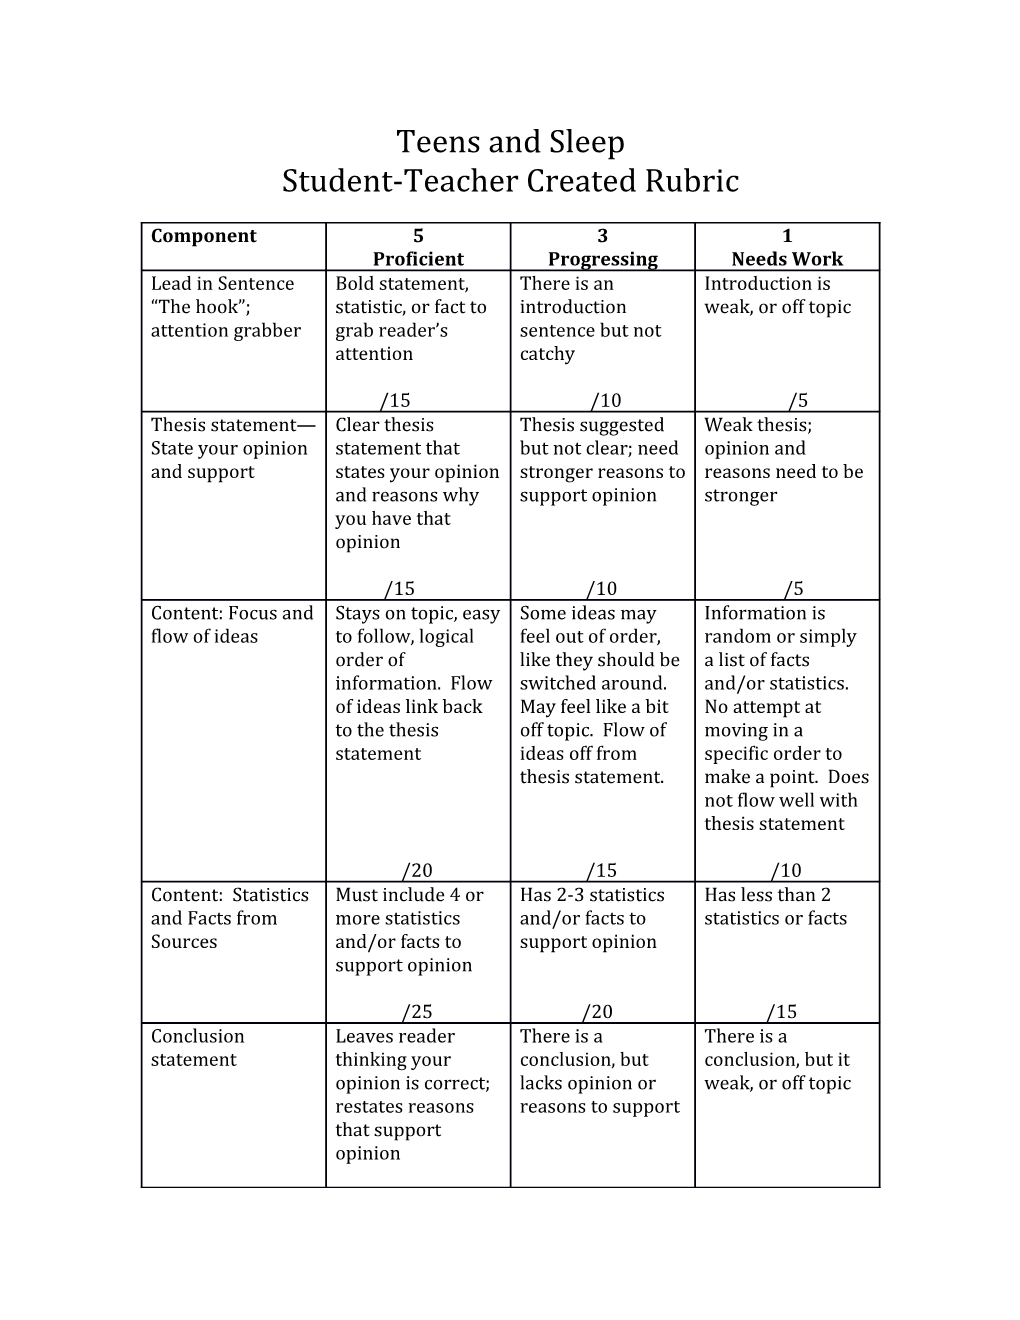 Student-Teacher Created Rubric